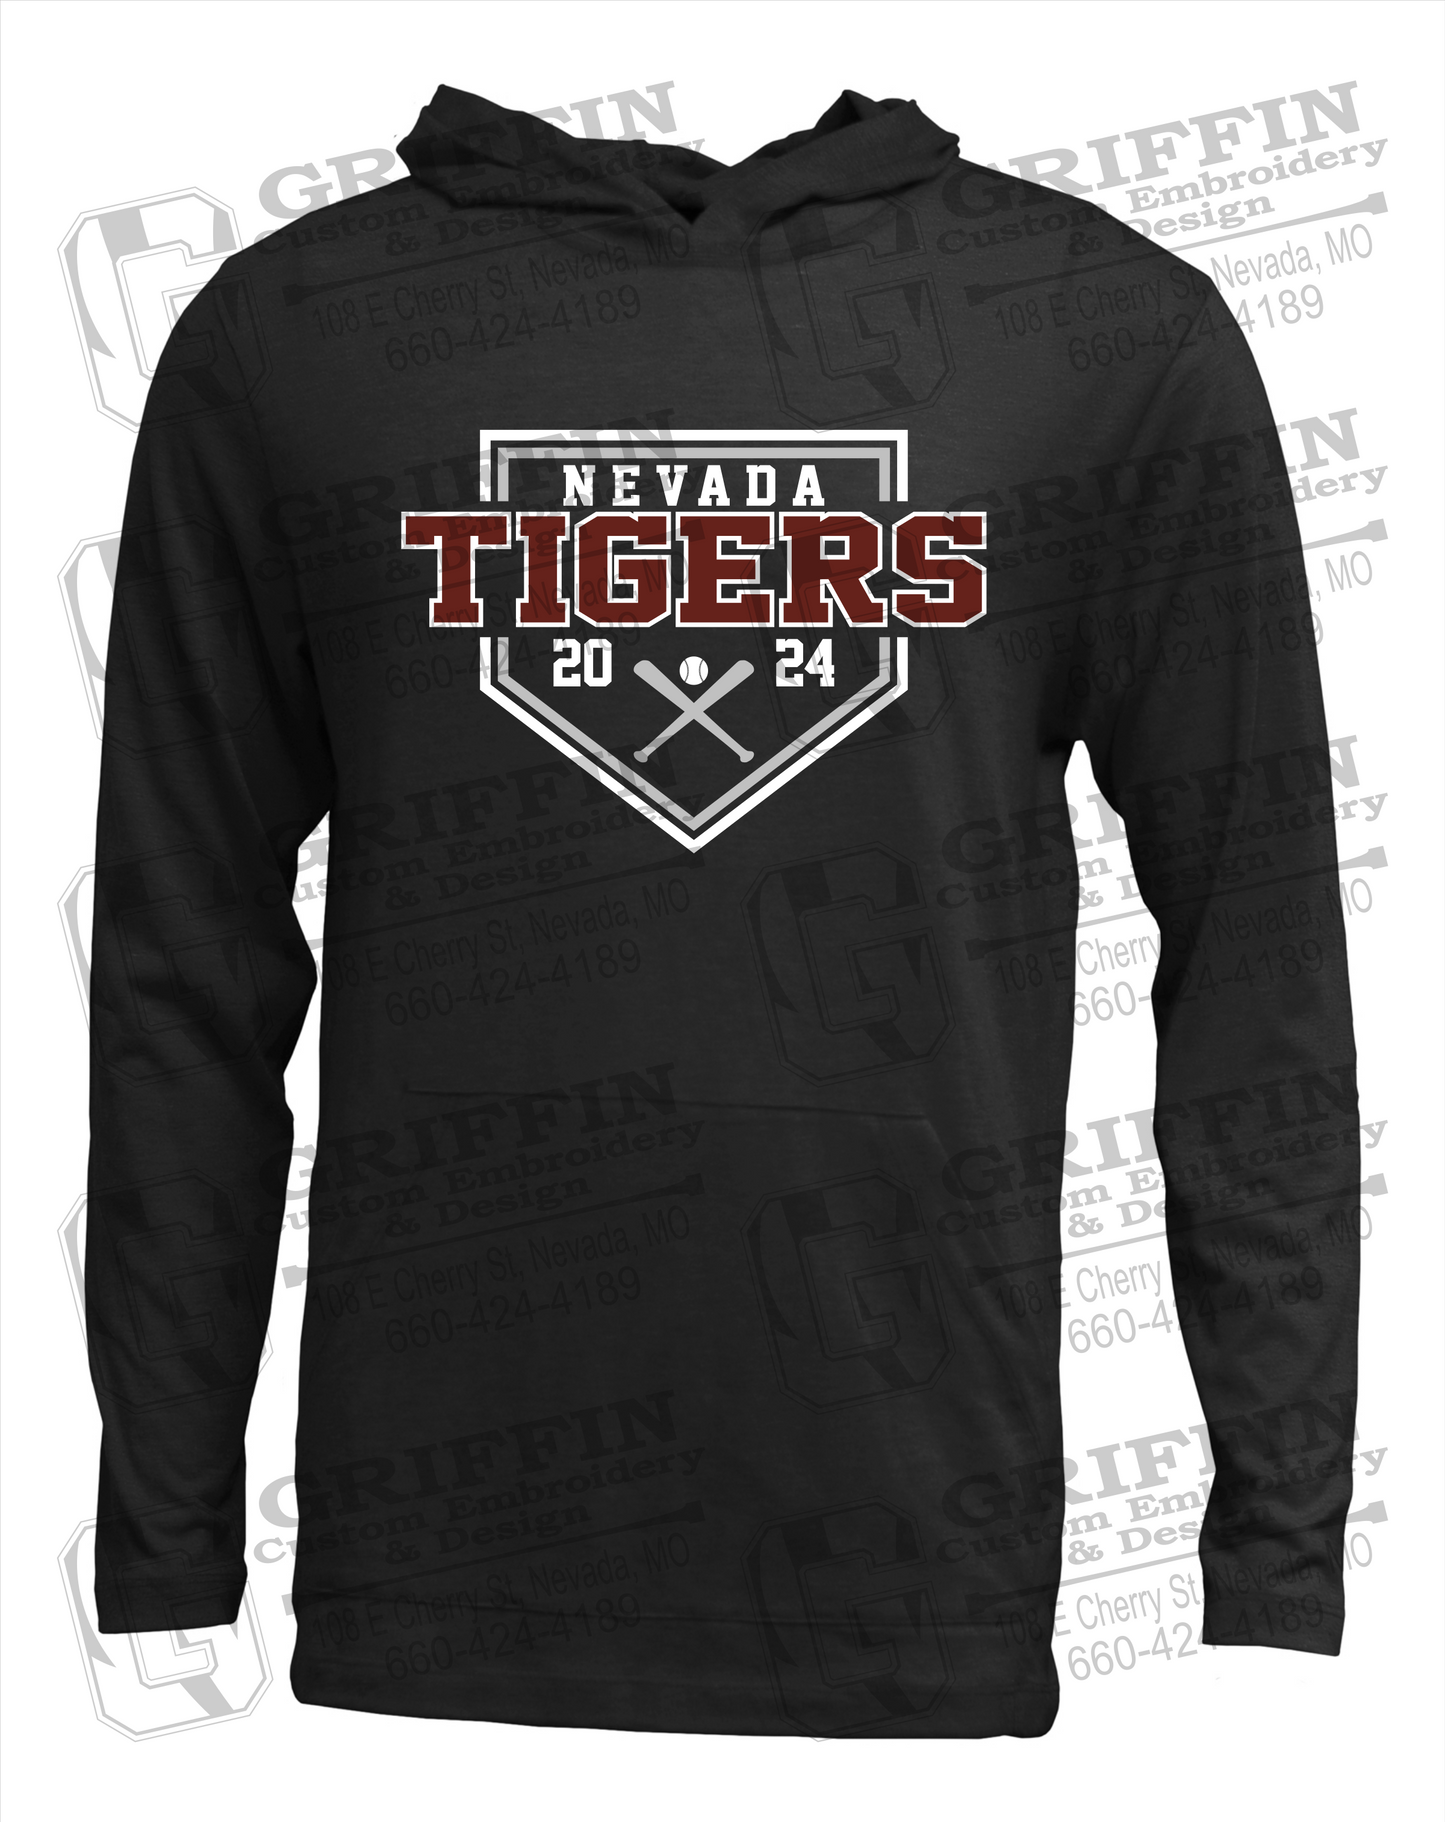 Soft-Tek T-Shirt Hoodie - Baseball - Nevada Tigers 25-A